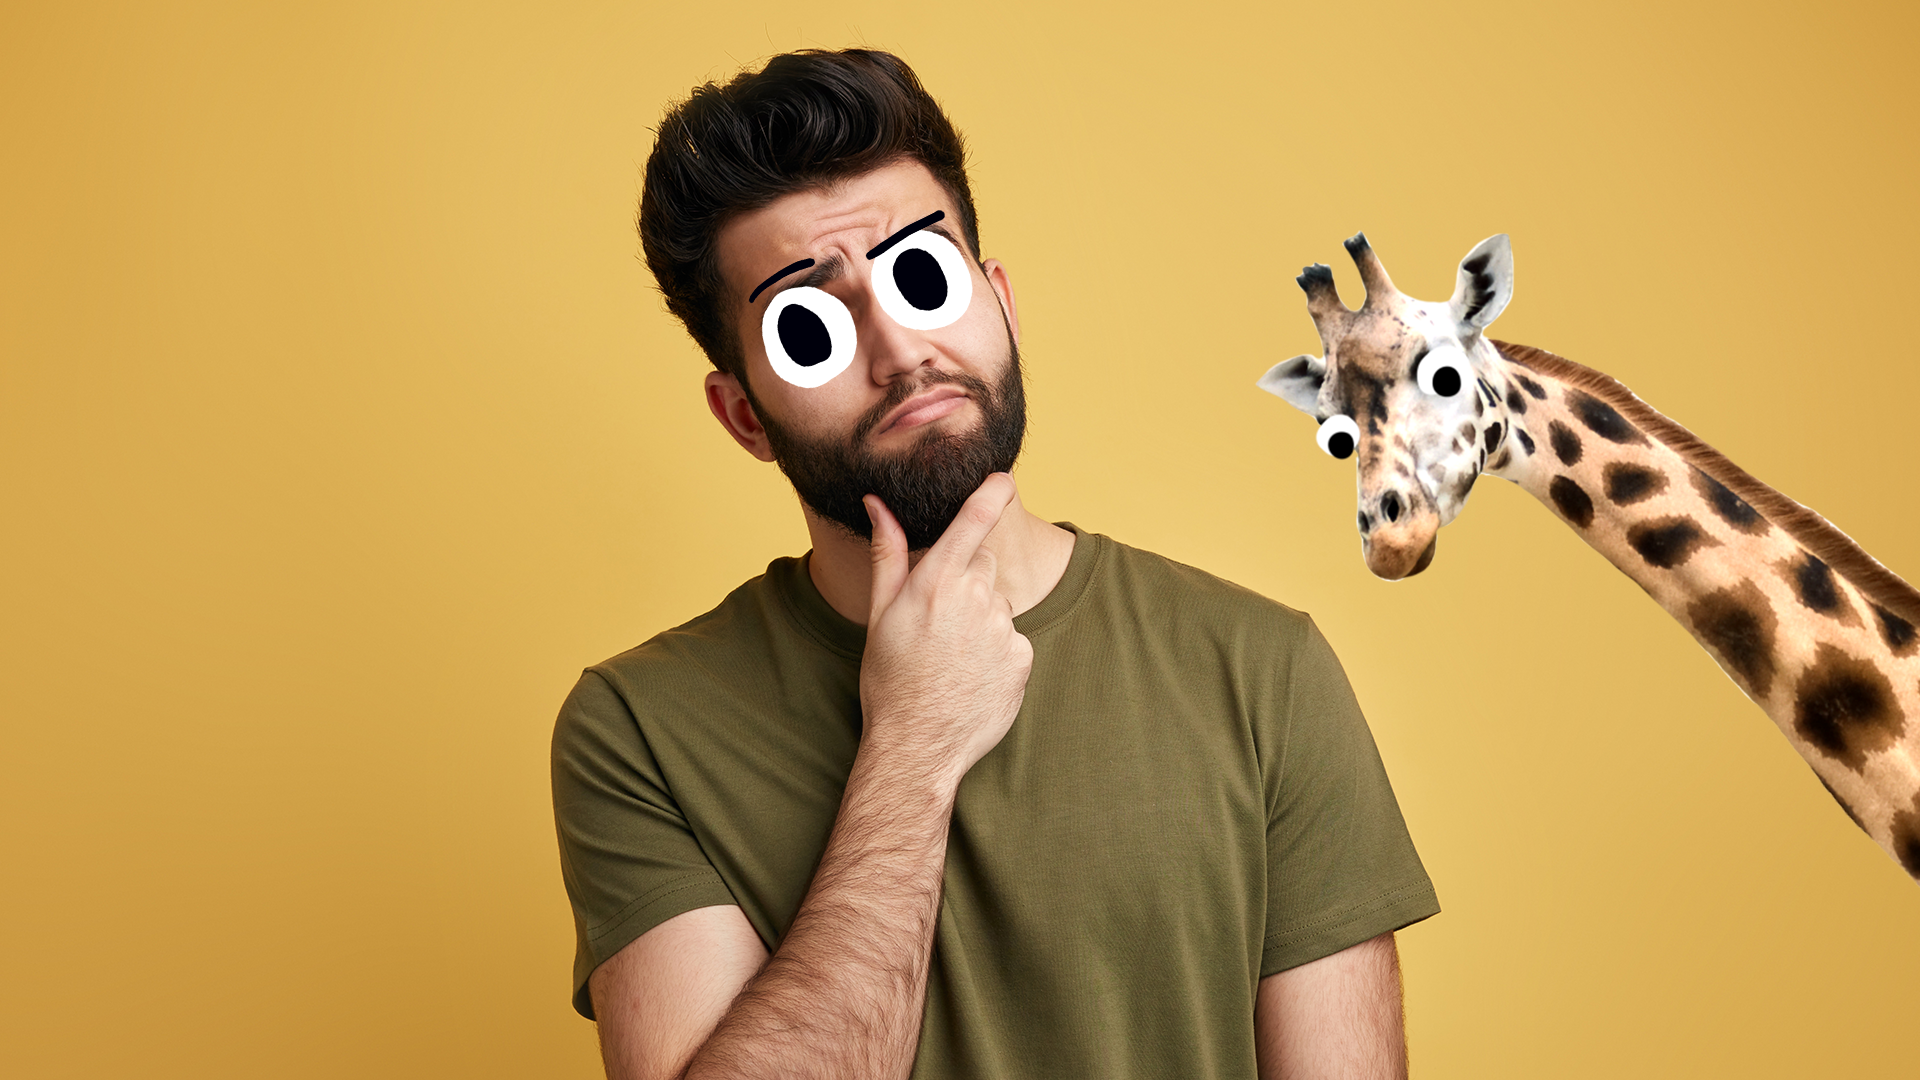 Man thinking on yellow background with derpy giraffe head